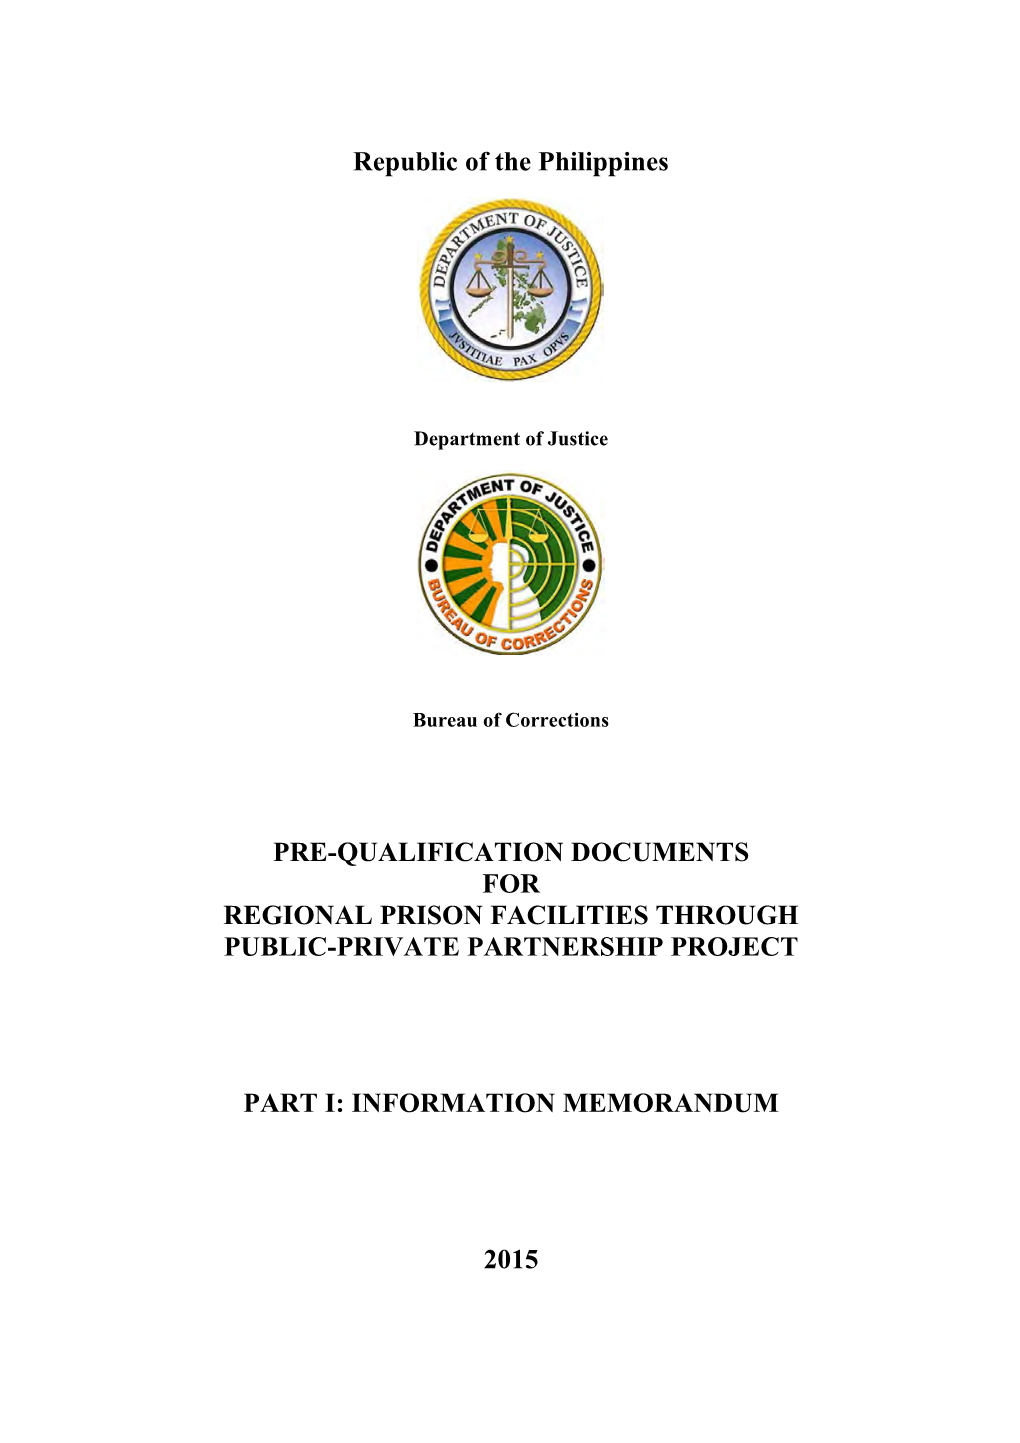 Republic of the Philippines PRE-QUALIFICATION DOCUMENTS for REGIONAL PRISON FACILITIES THROUGH PUBLIC-PRIVATE PARTNERSHIP PROJEC